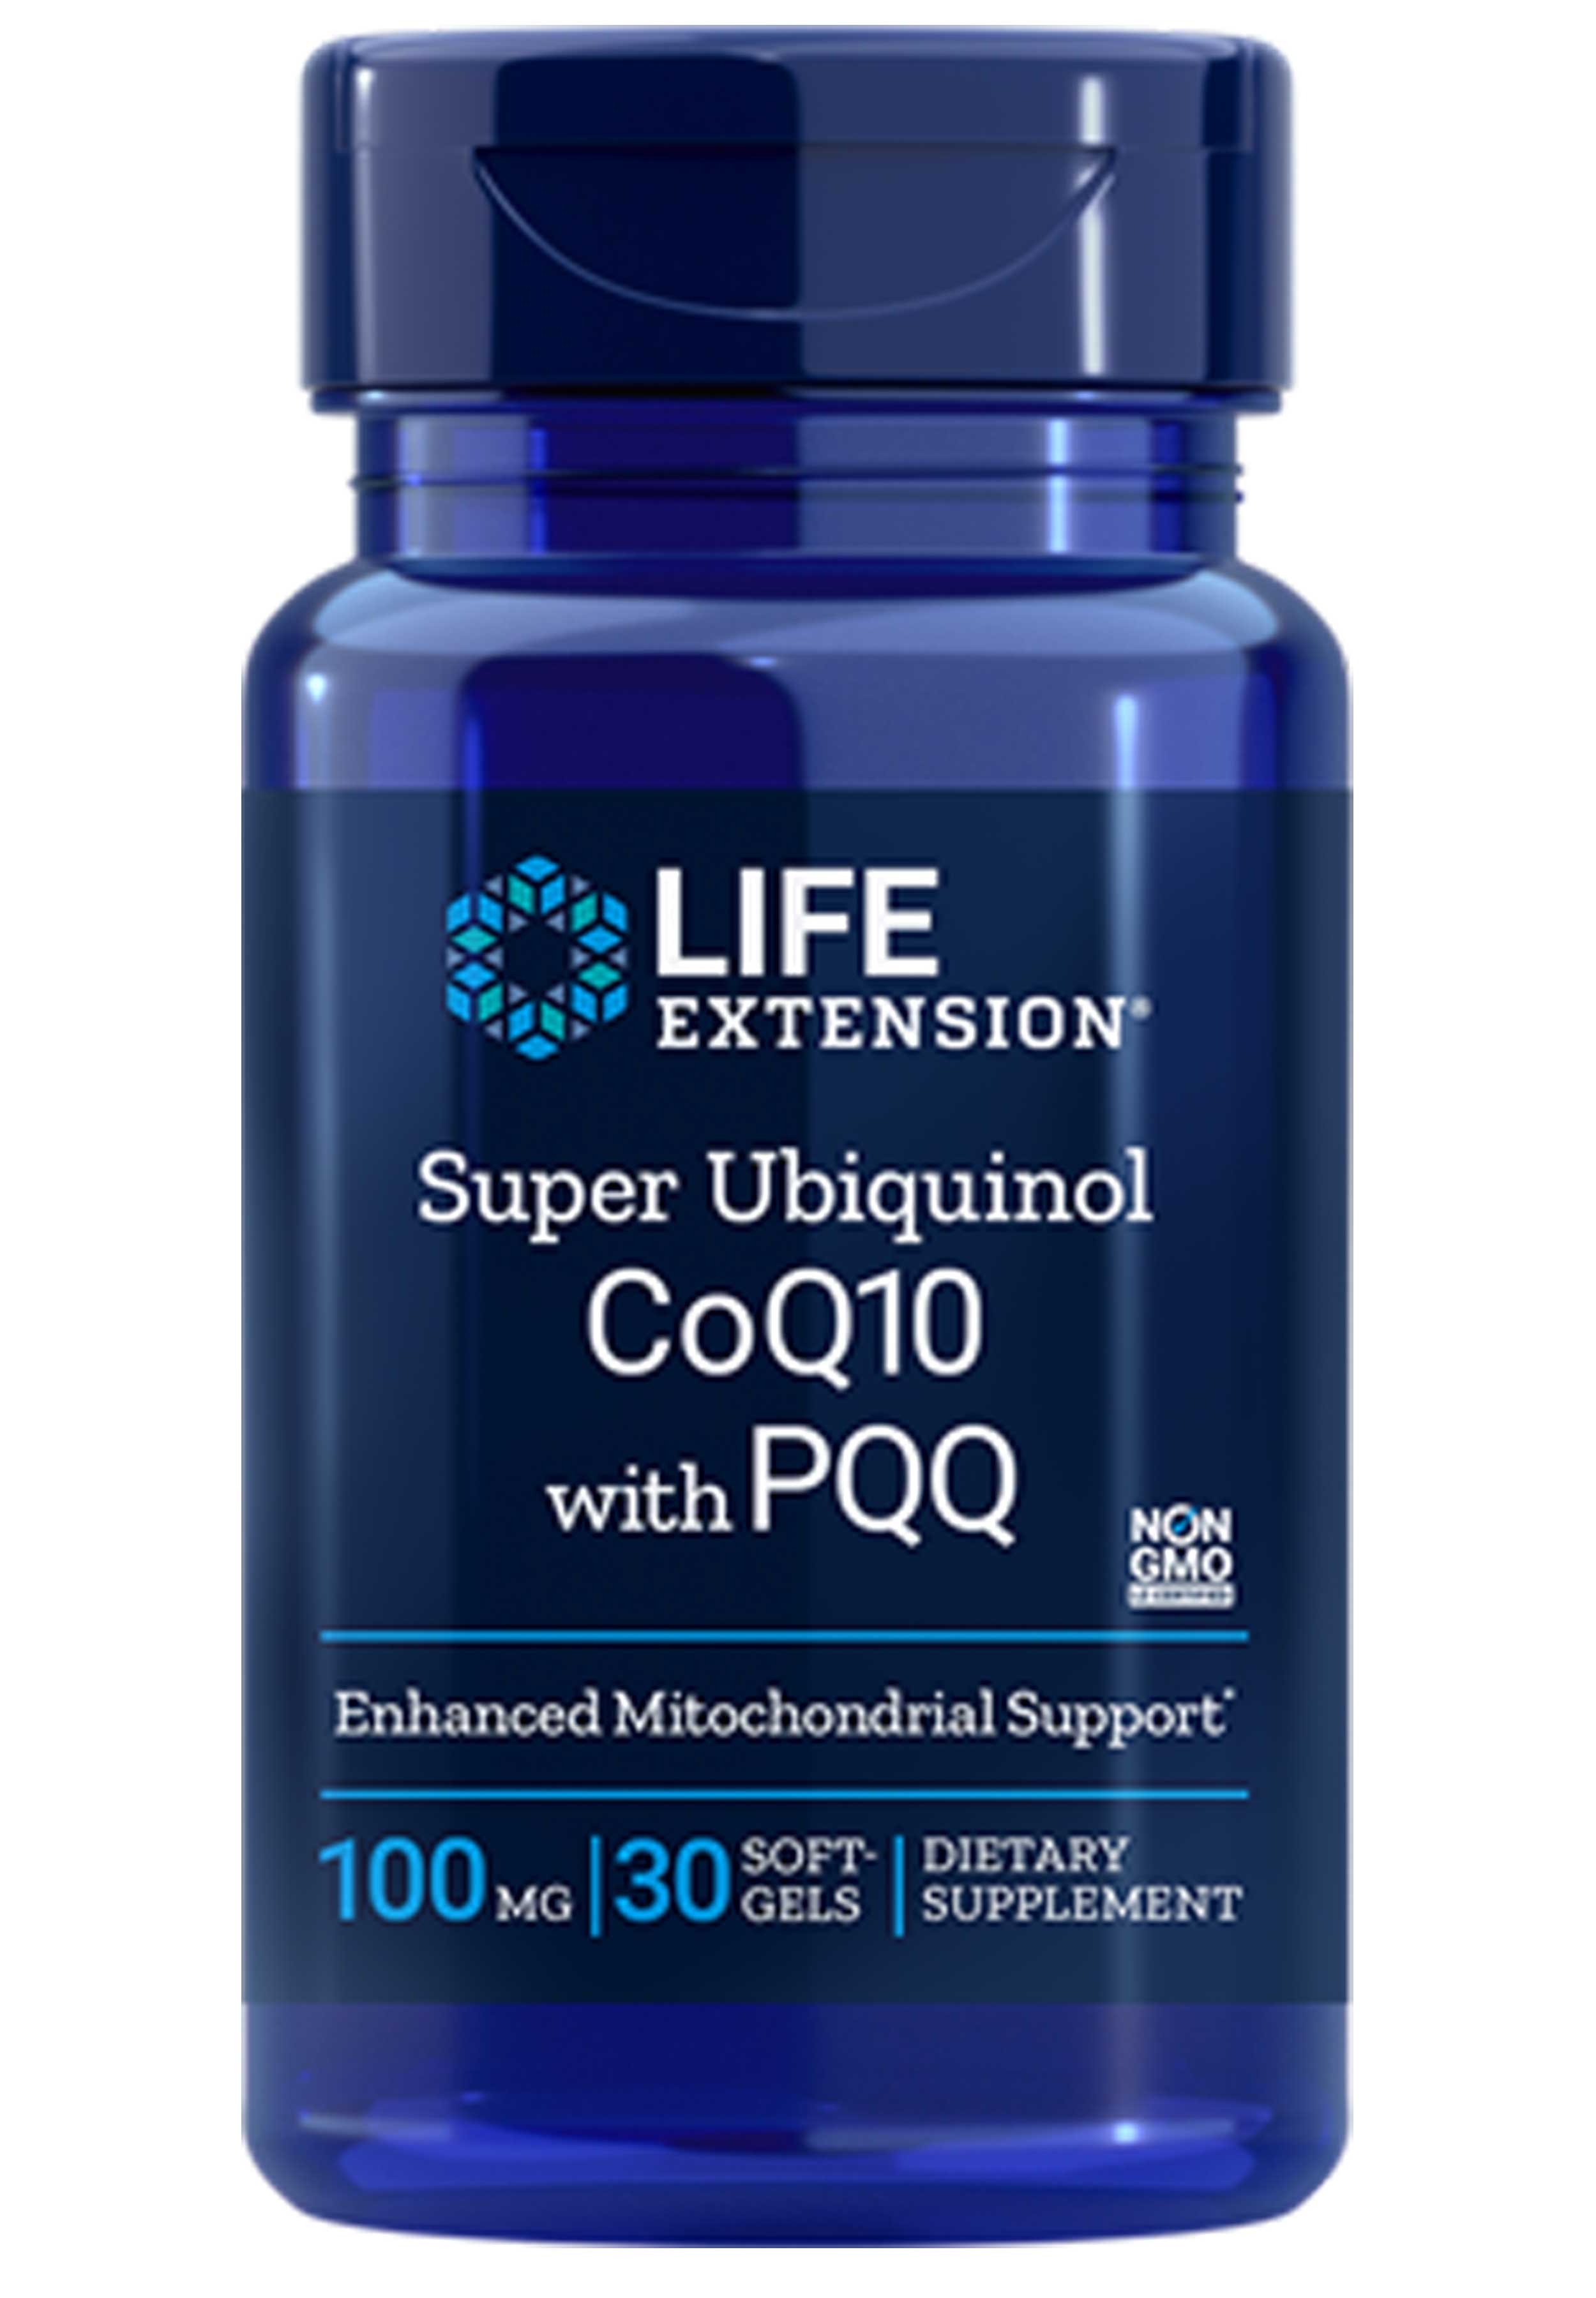 Life Extension Super Ubiquinol CoQ10 with PQQ